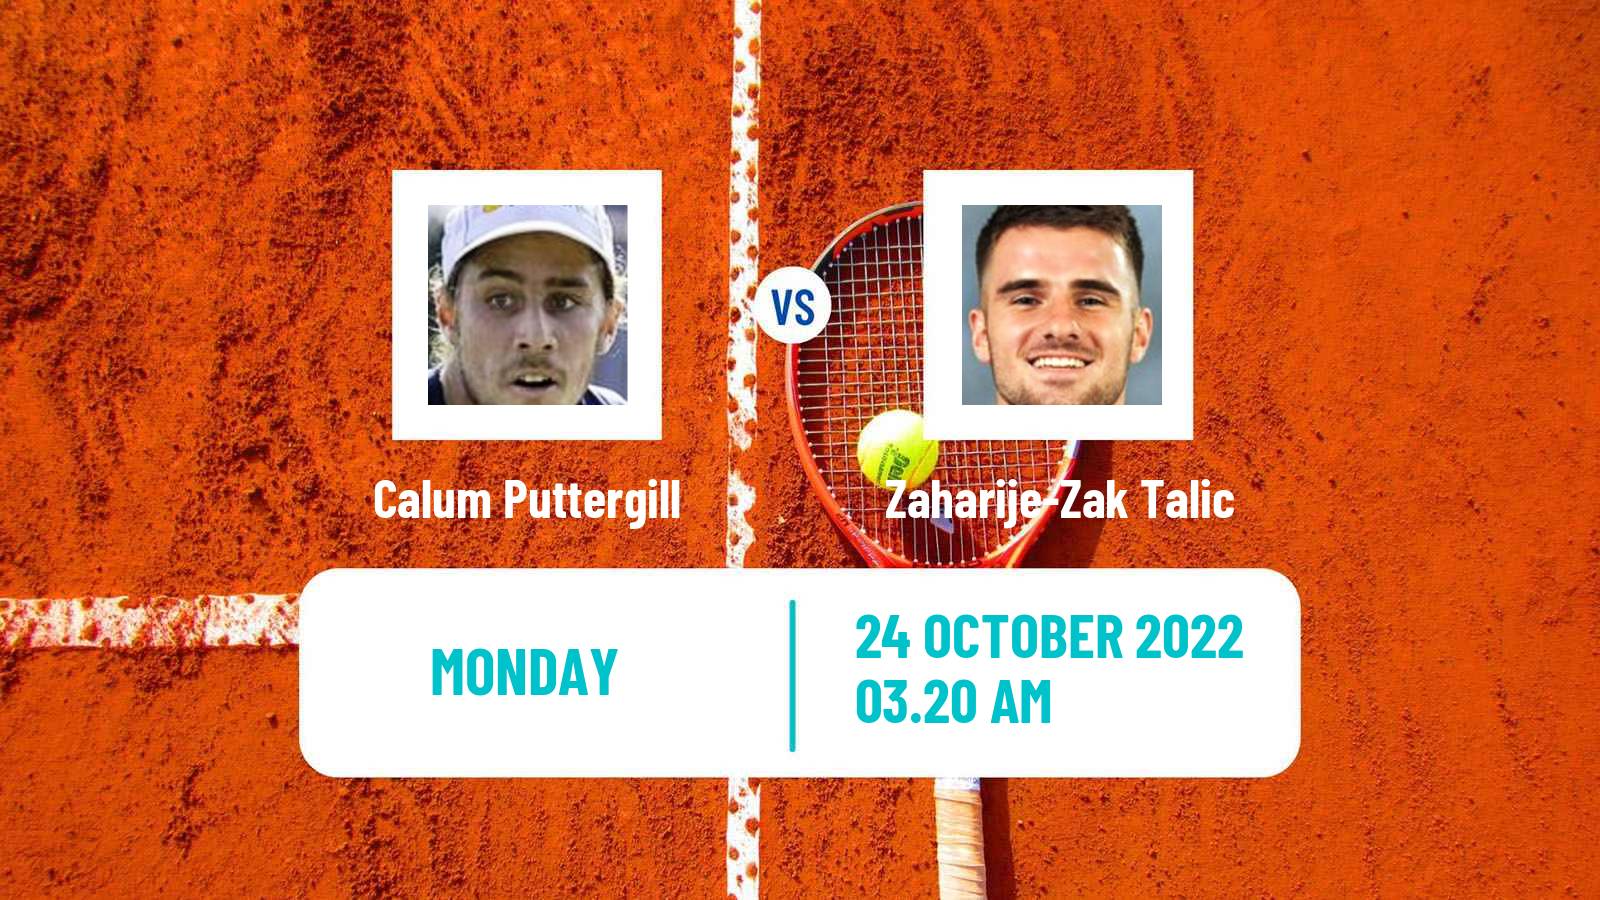 Tennis ATP Challenger Calum Puttergill - Zaharije-Zak Talic